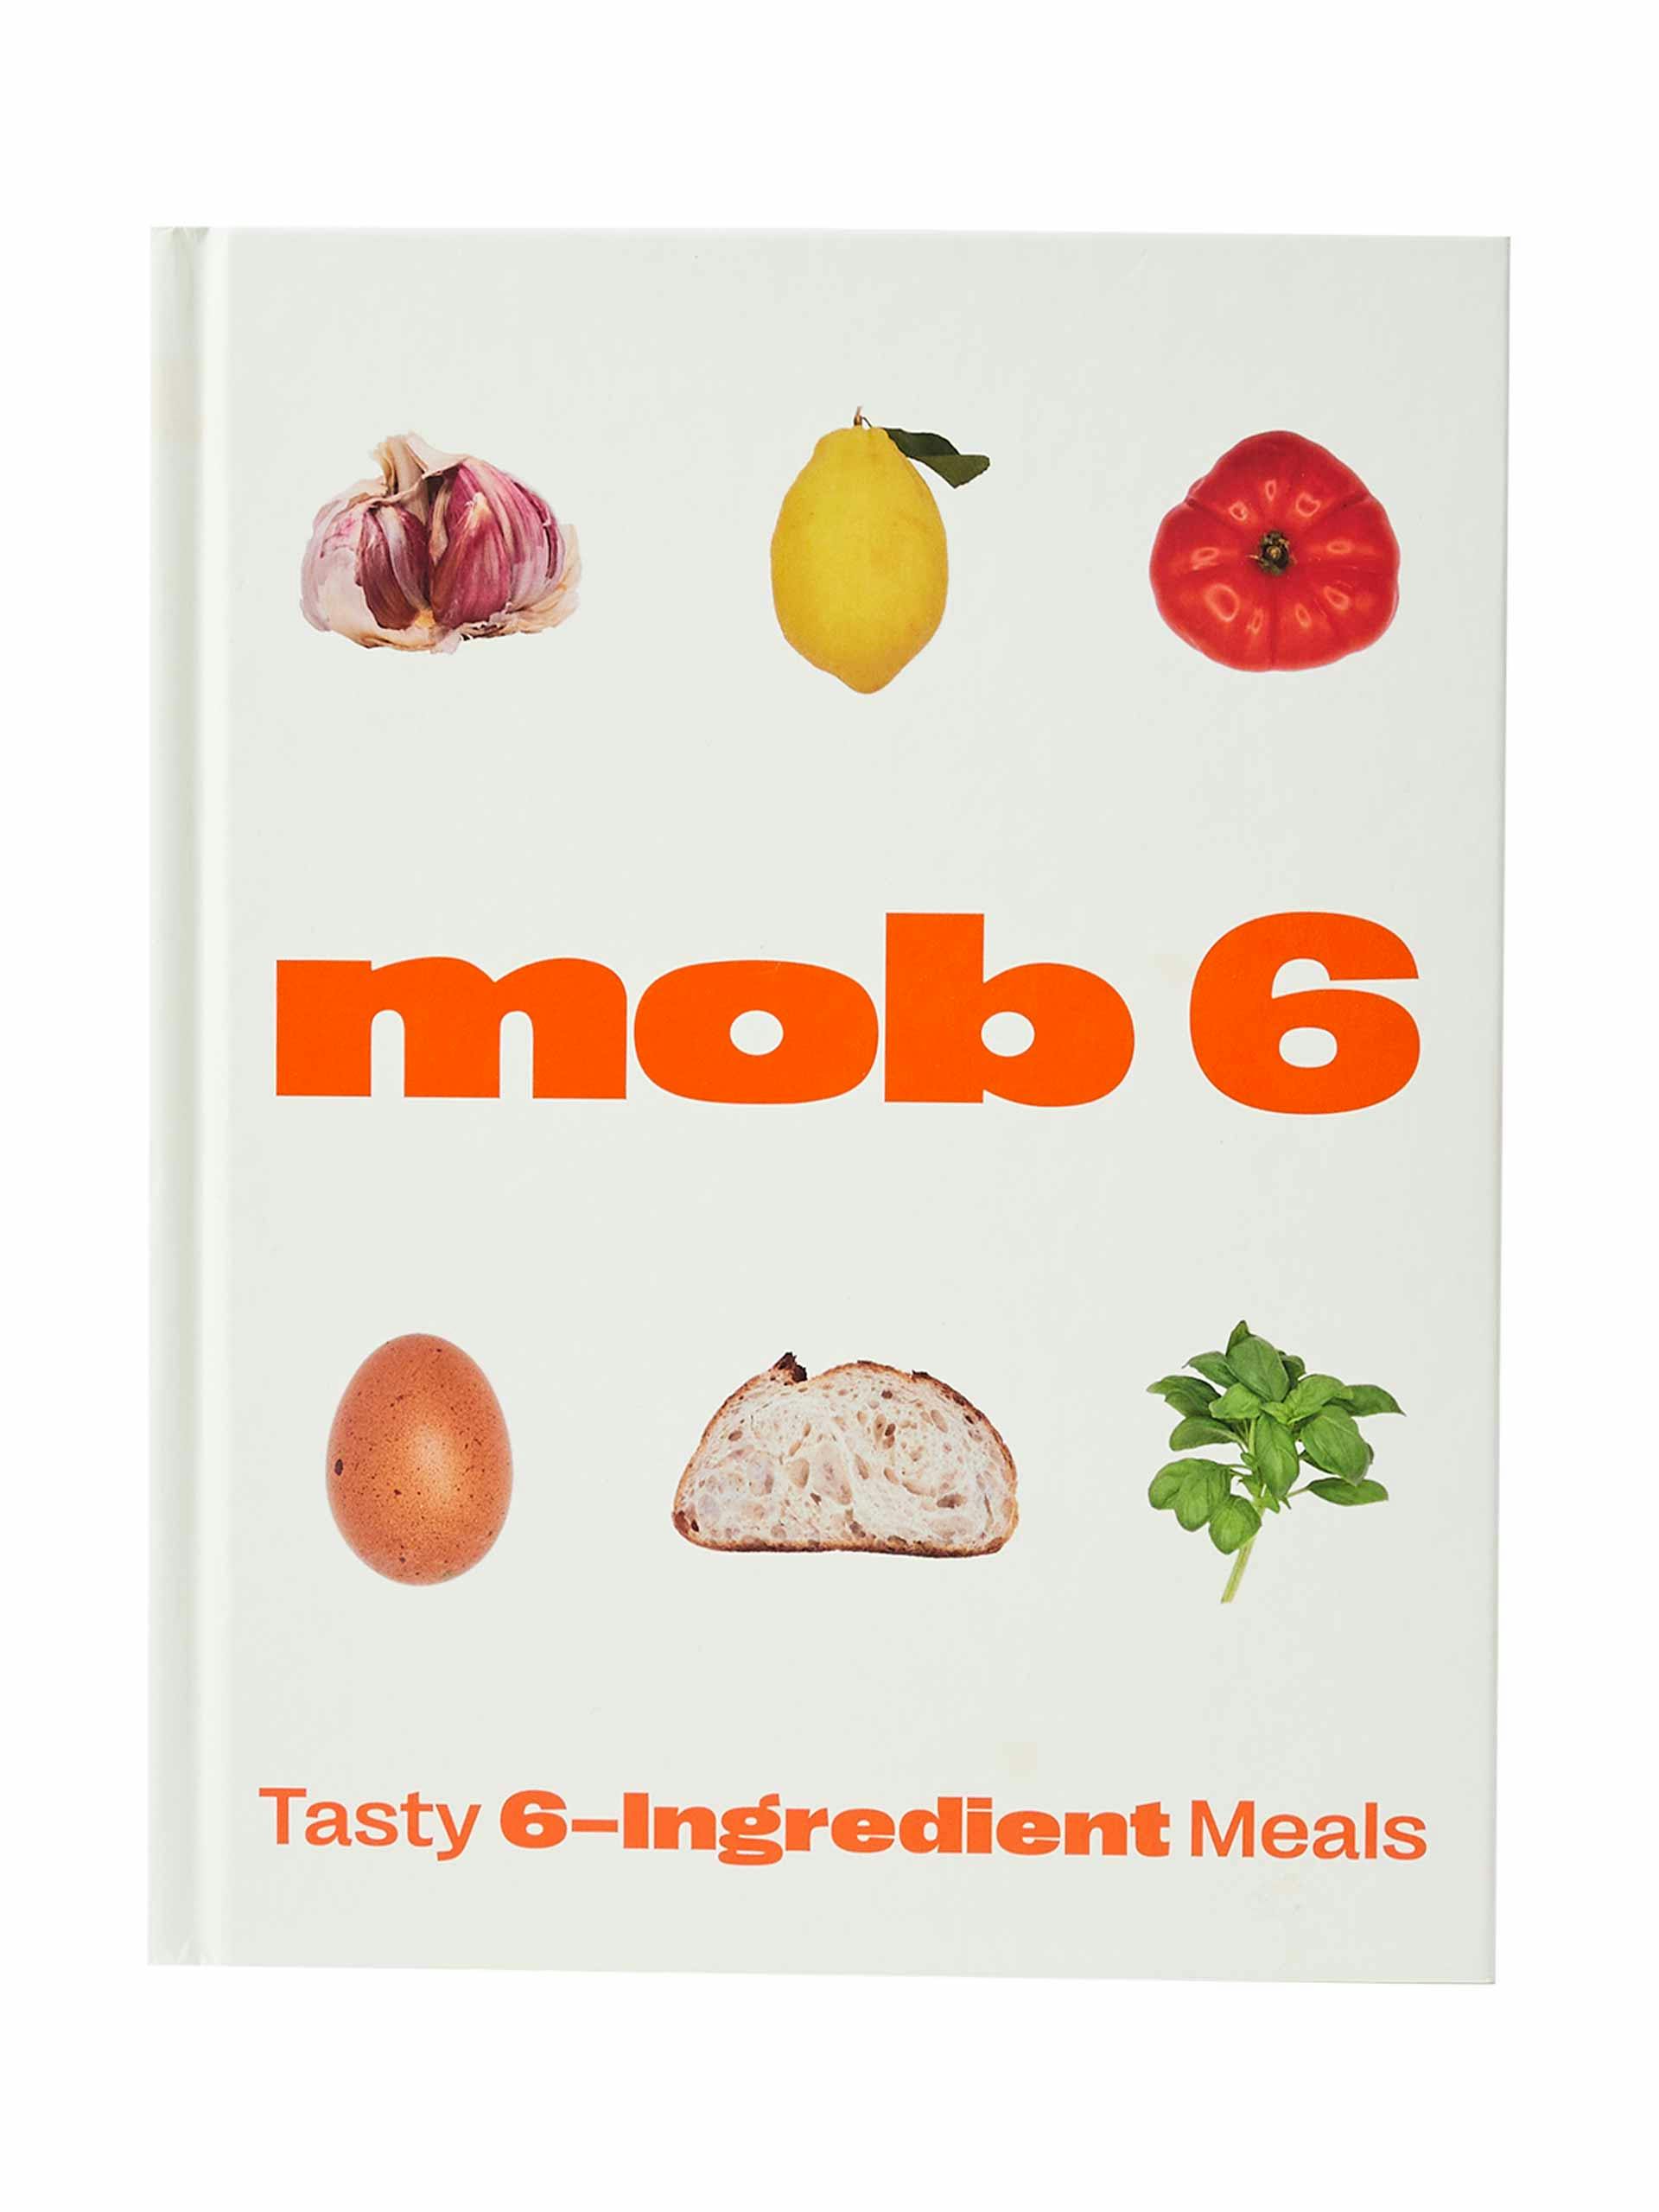 Mob 6 cookbook